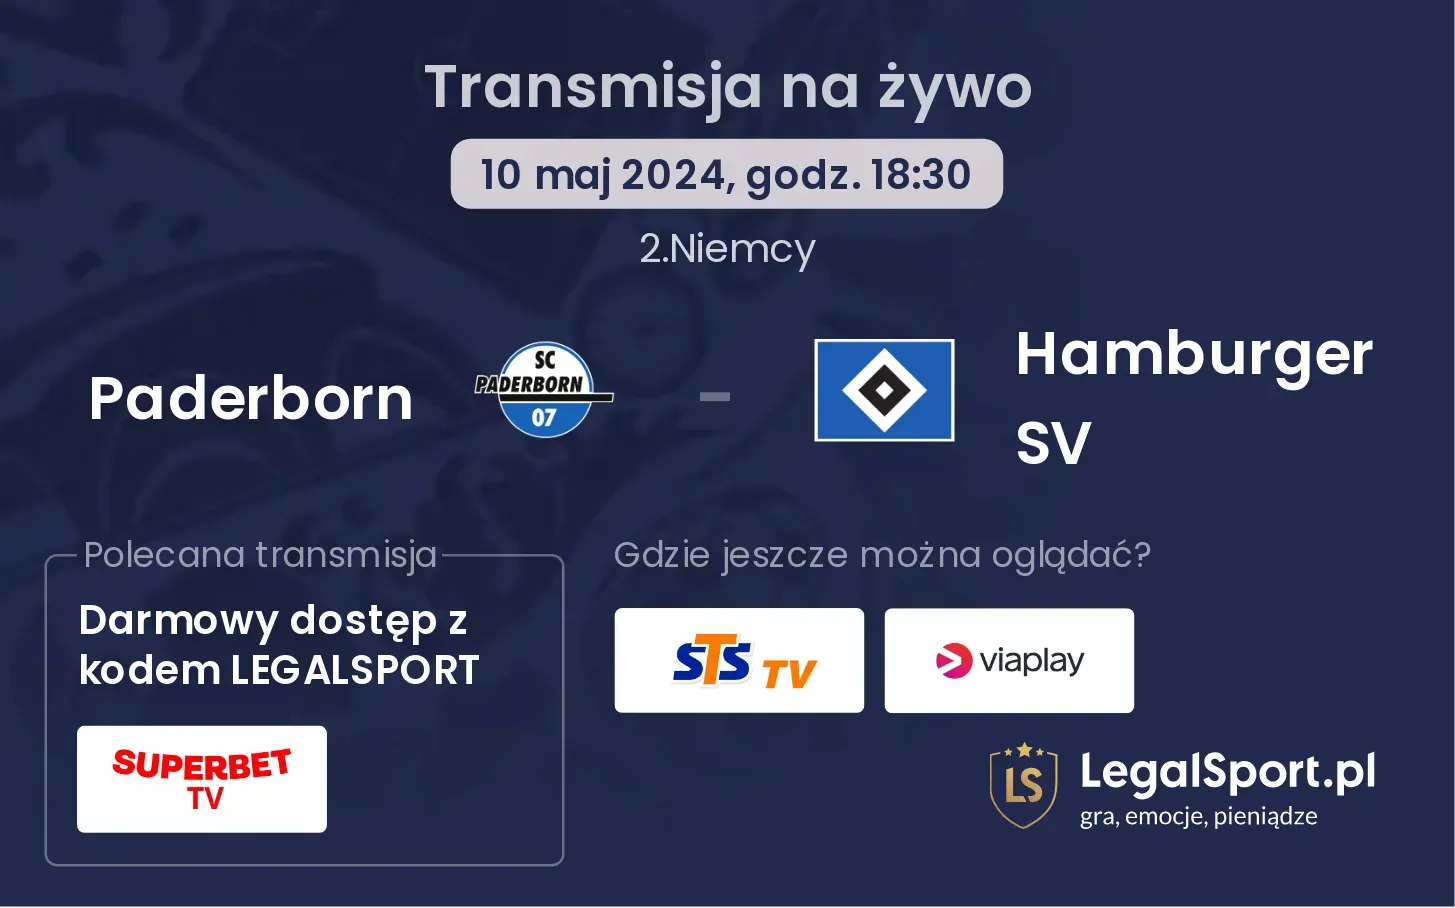 Paderborn - Hamburger SV transmisja na żywo